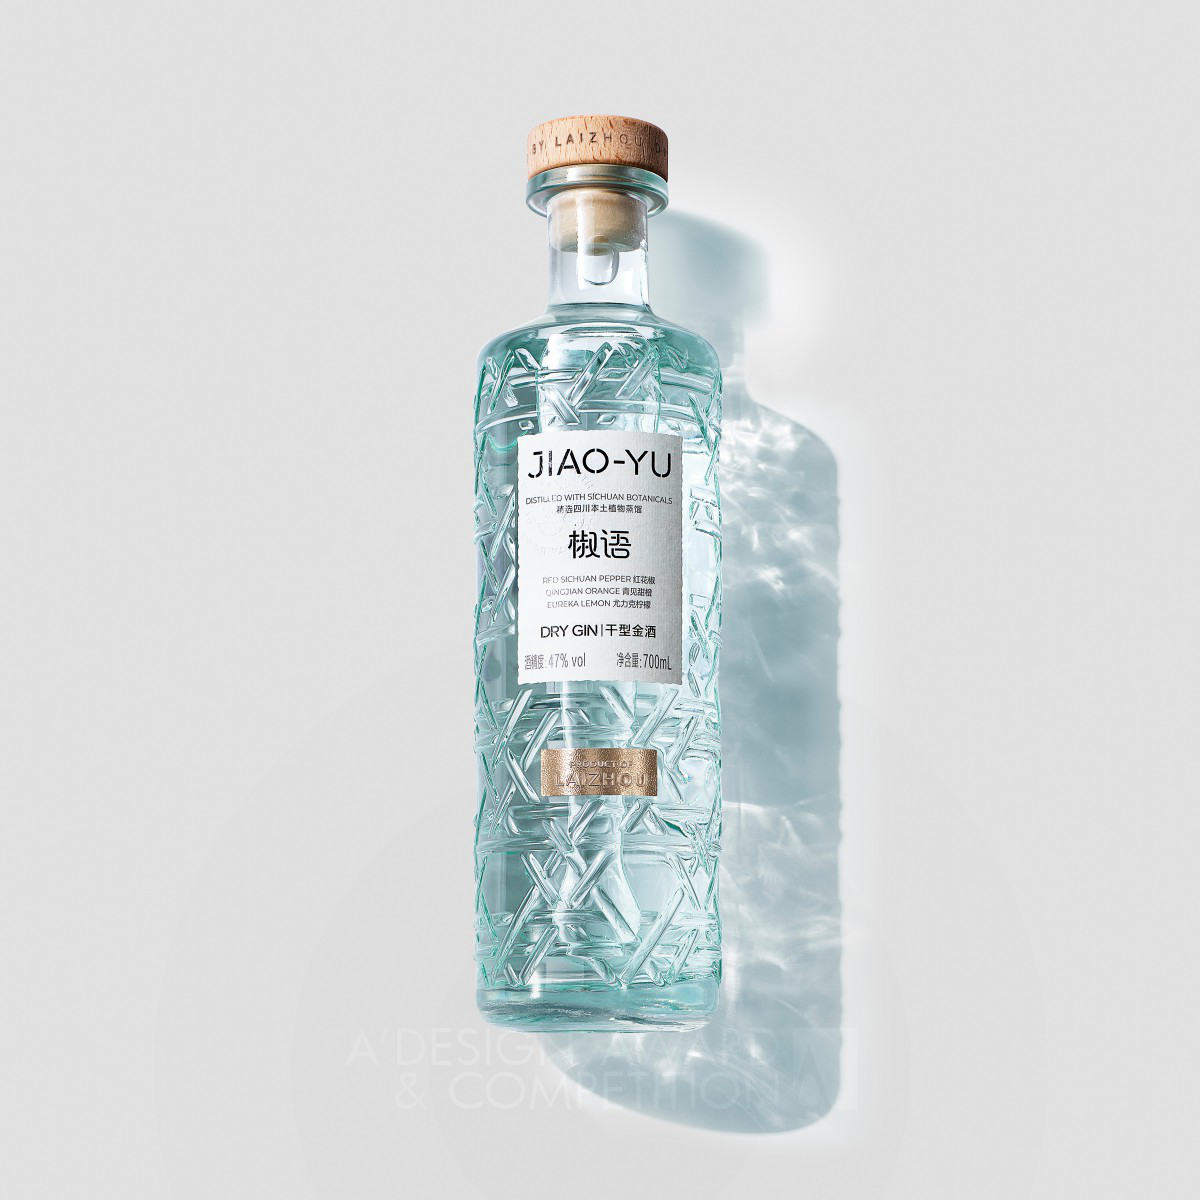 Jiao Yu Gin Packaging by Laizhou Distillery Silver Packaging Design Award Winner 2024 